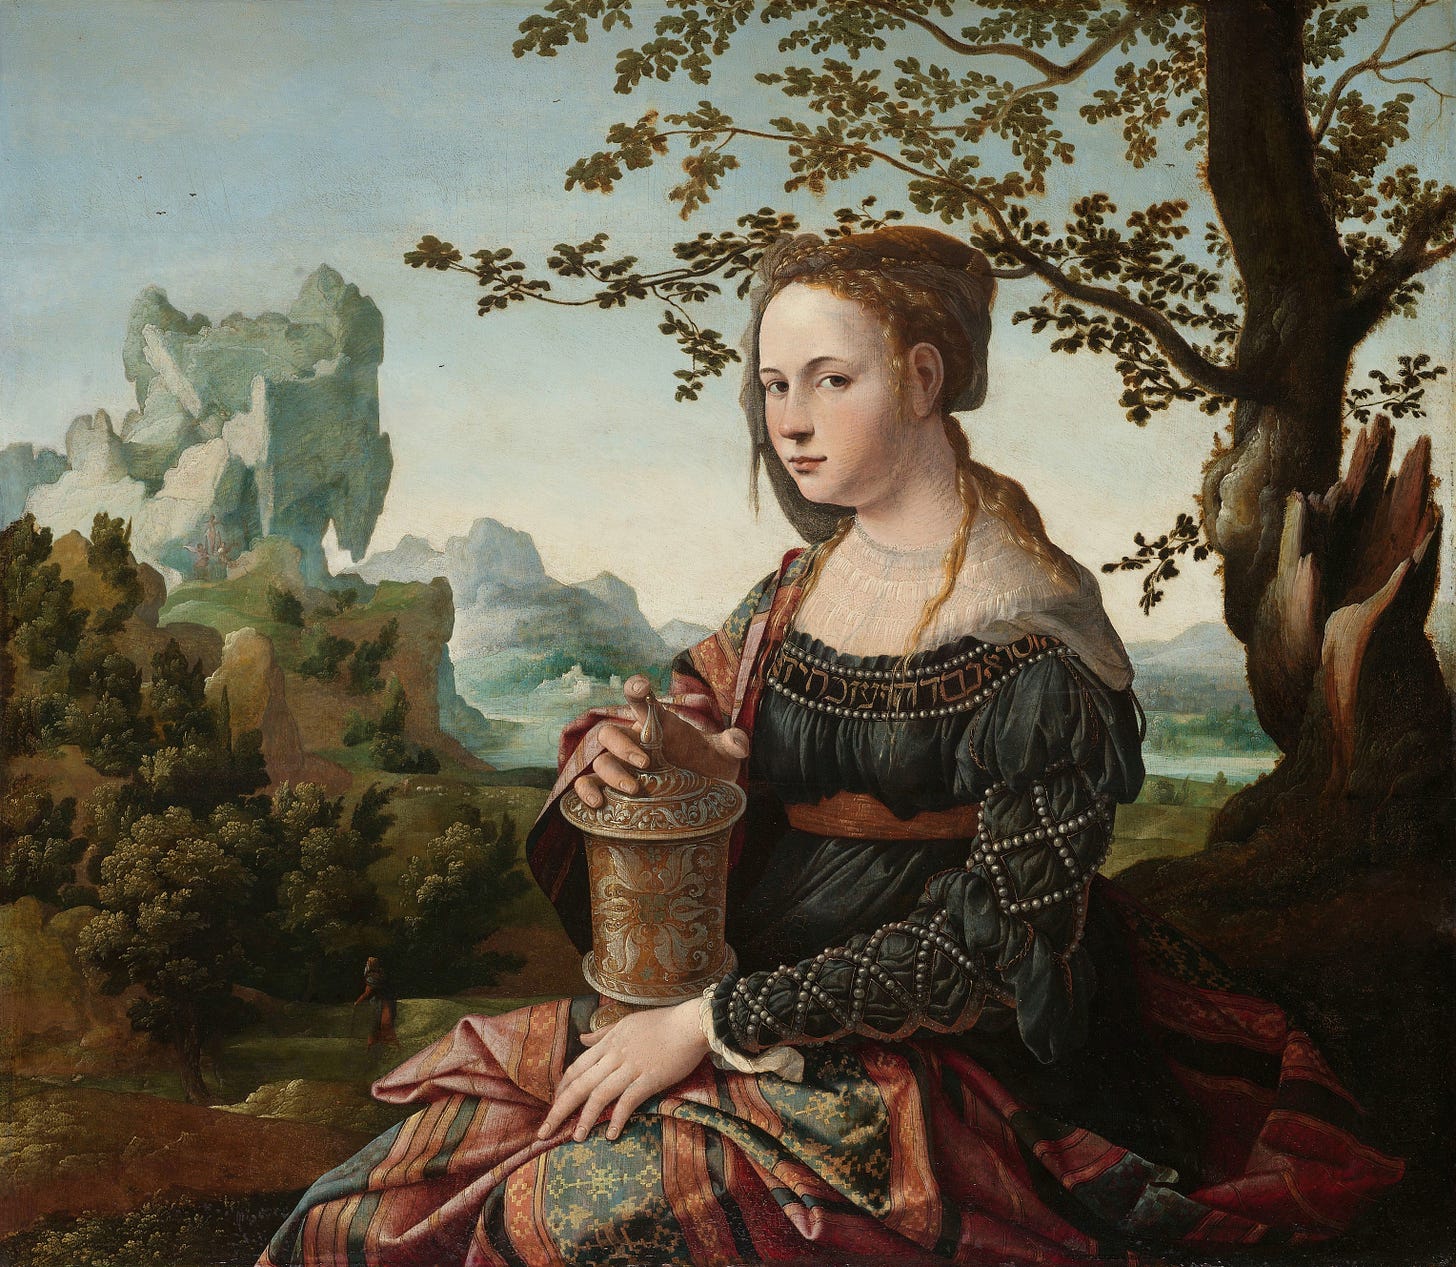 Mary Magdalene (c. 1530) by Jan van Scorel (Dutch, 1495-1562)